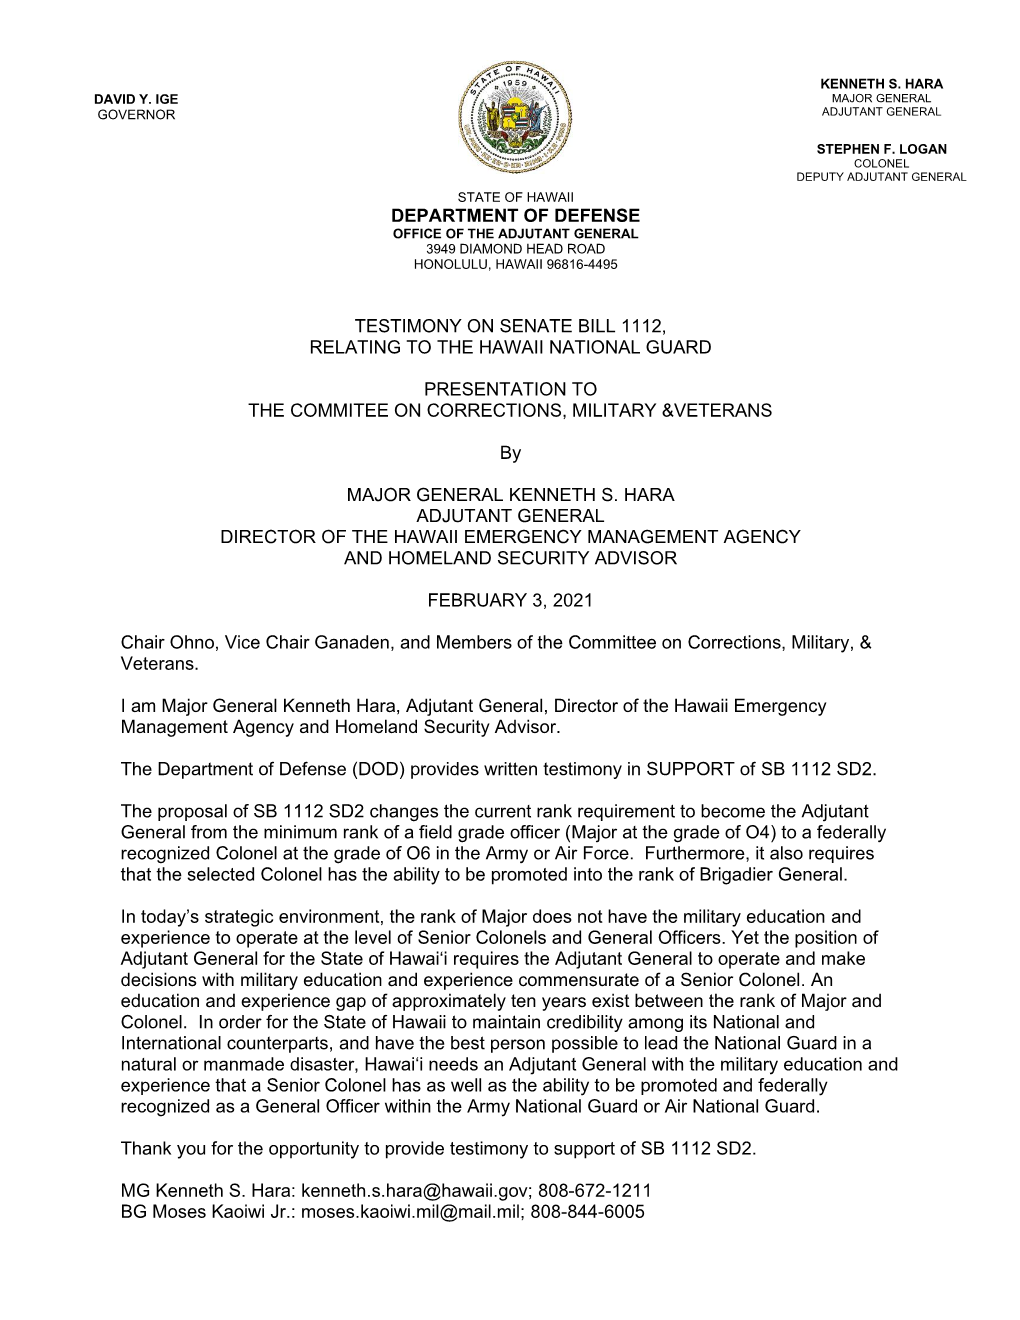 Department of Defense Testimony on Senate Bill